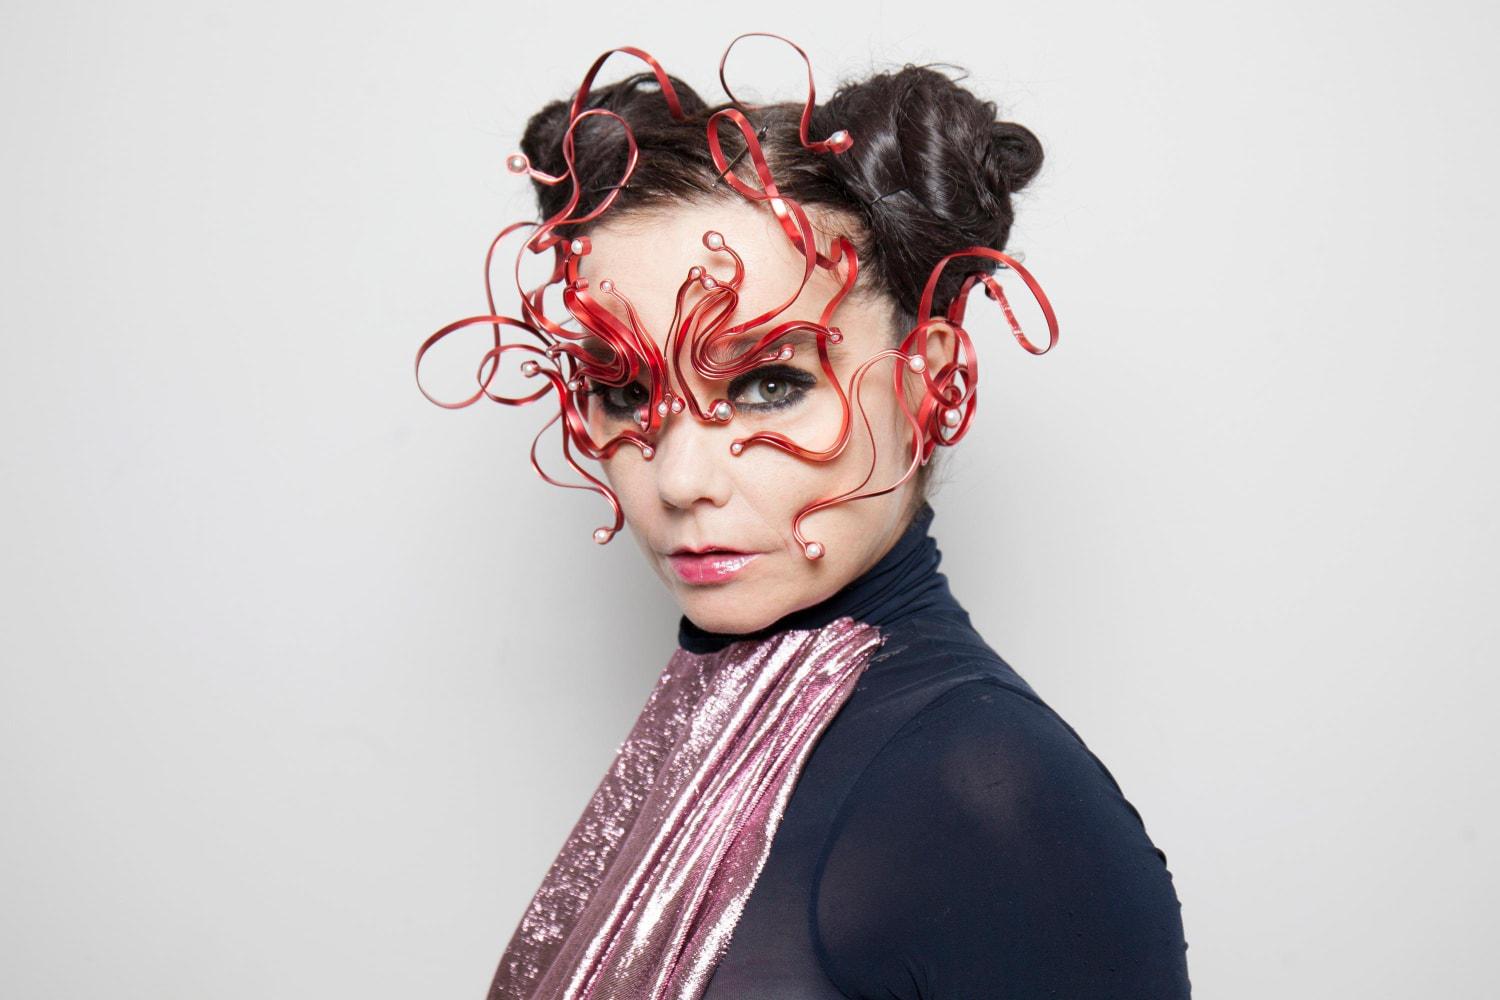 Björk at Under the K Bridge Park